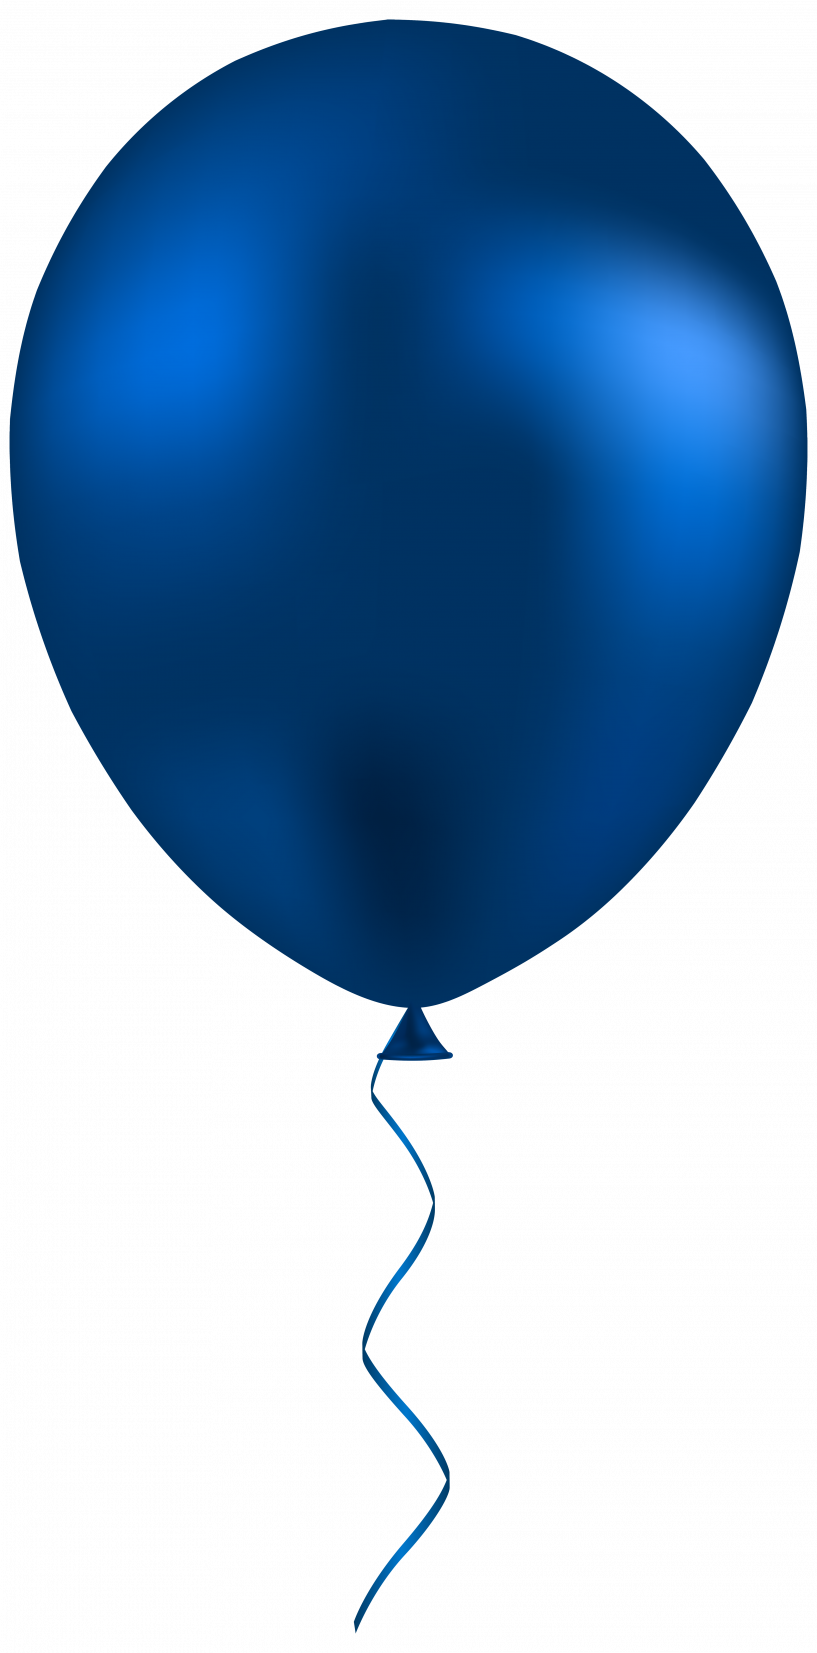 Balloon Free Jokingart Com Ⓒ - Balloon Free Jokingart Com Ⓒ (817x1653)